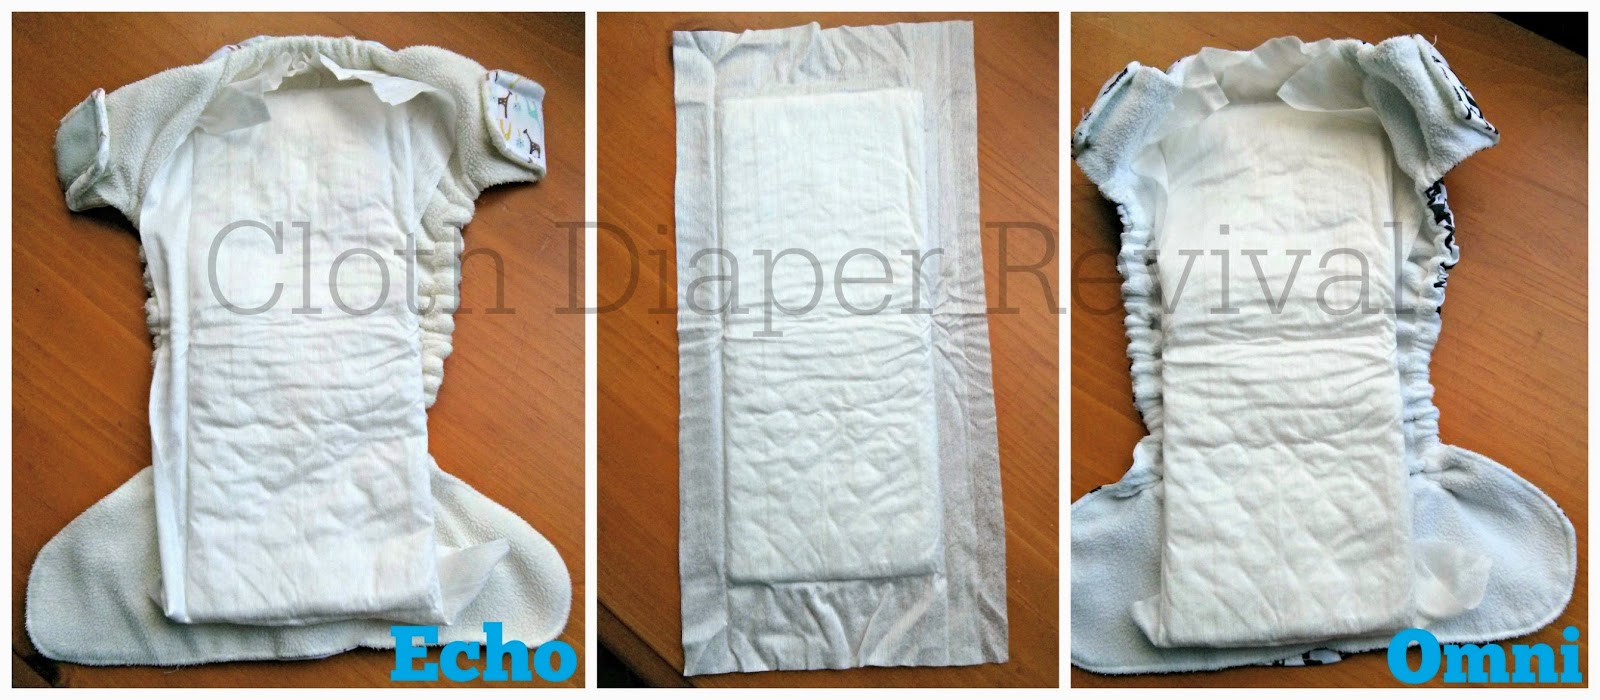 hybrid cloth diaper